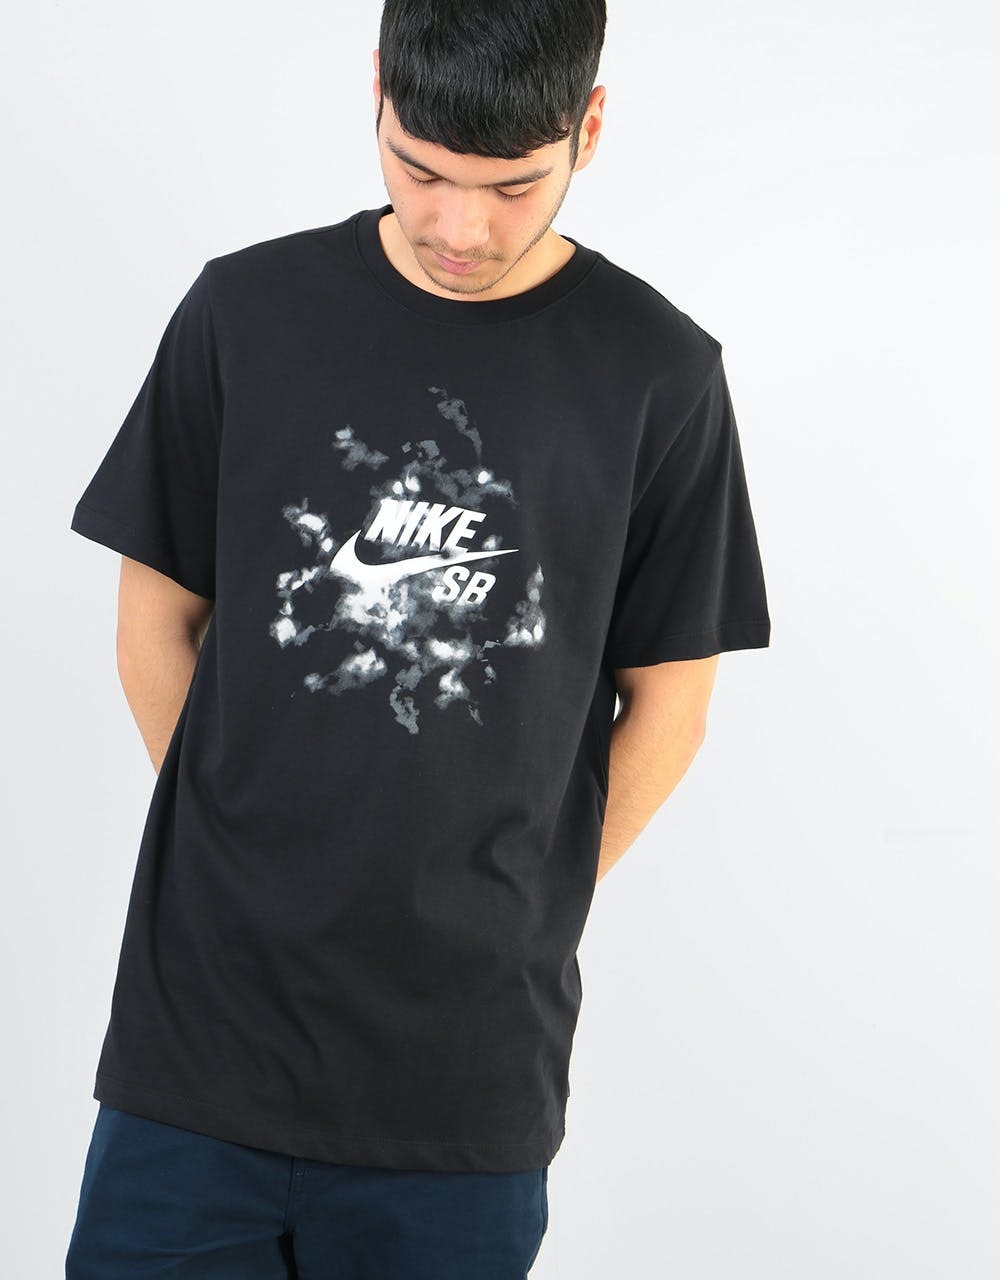 Nike SB Dorm Room 3 T-Shirt - Black/White